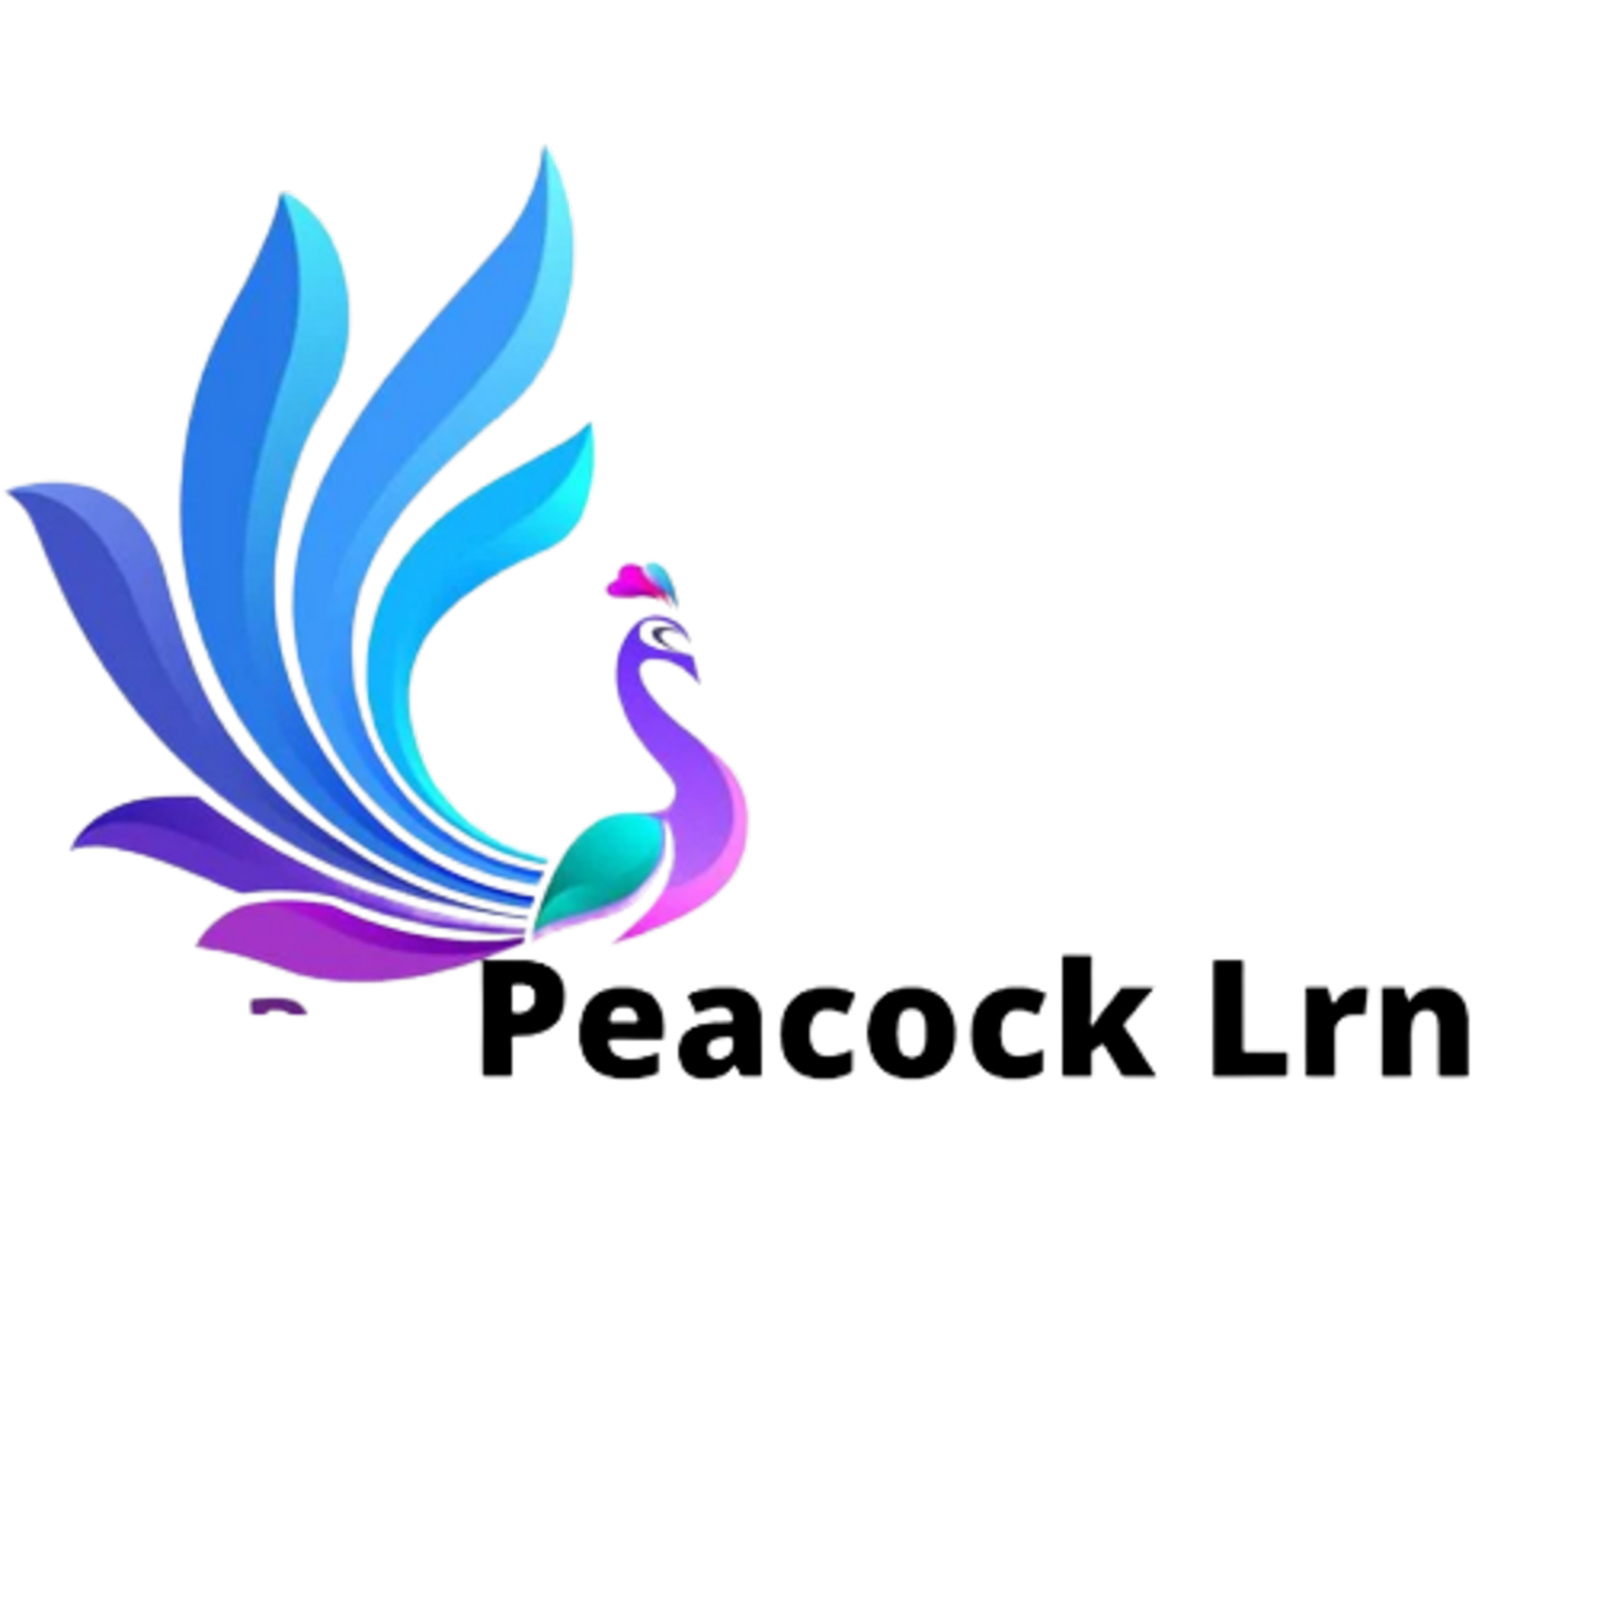 Peacock Lrn